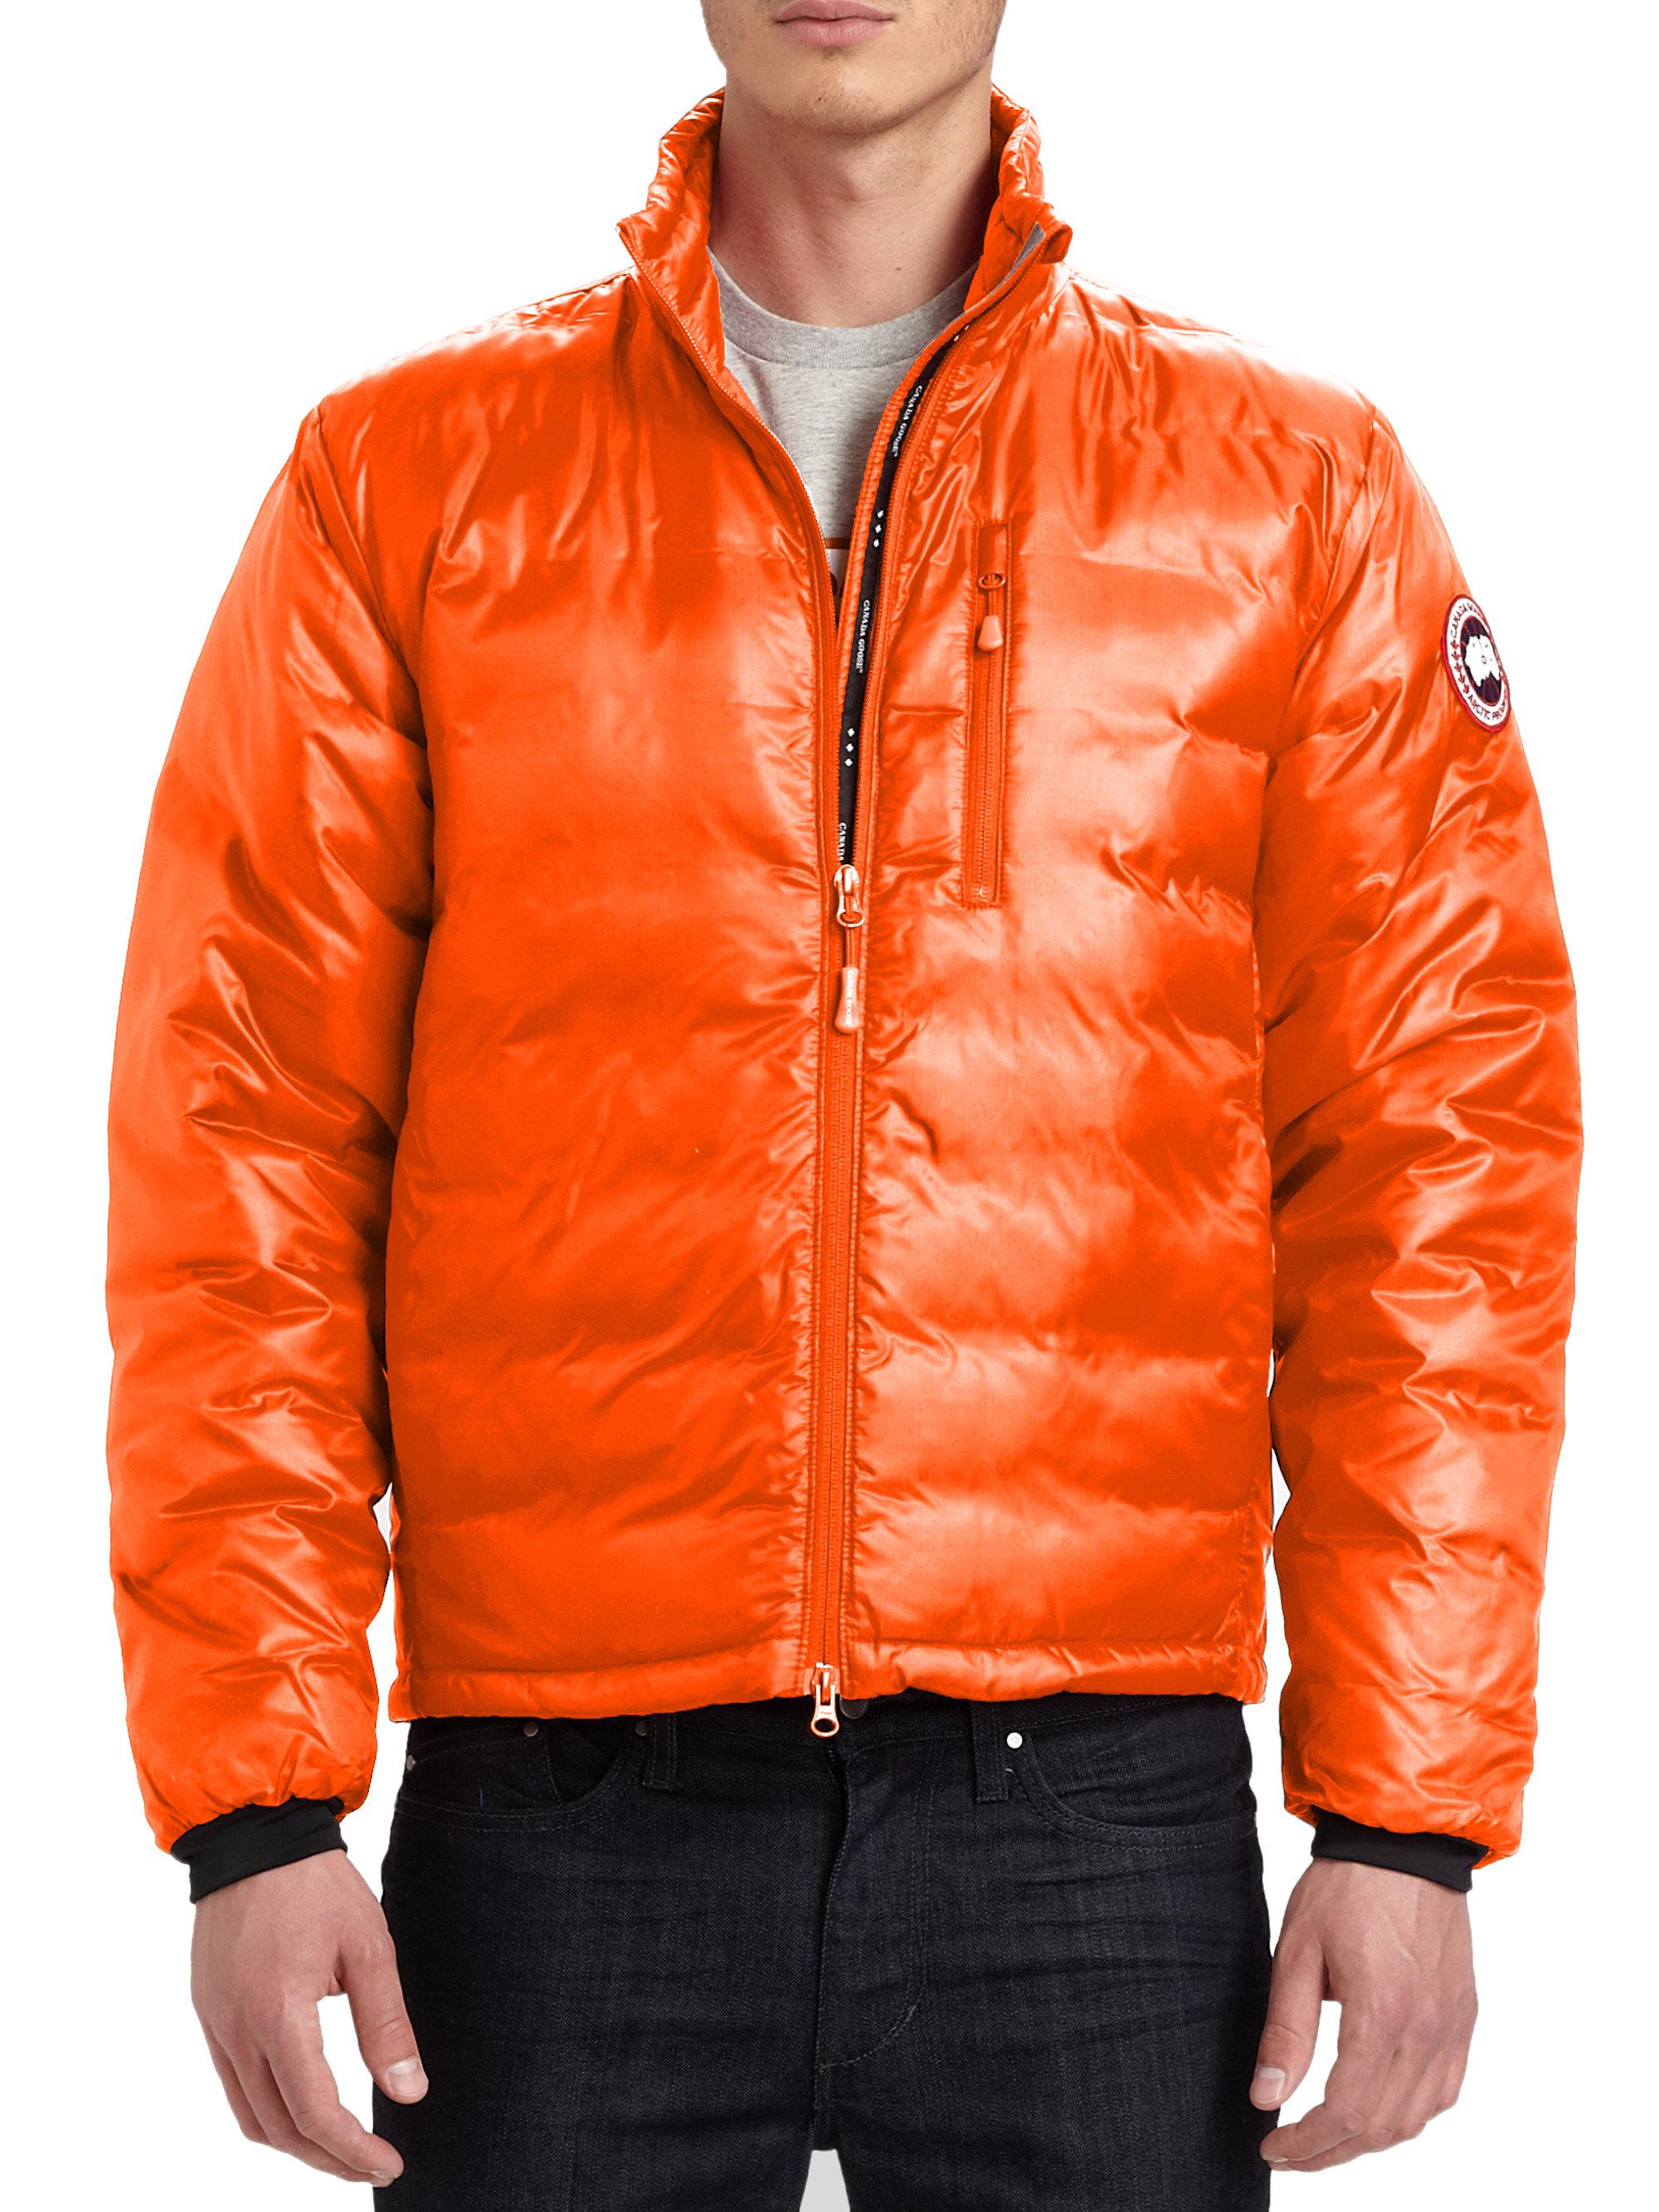 Lyst - Canada goose Lodge Down Jacket in Orange for Men